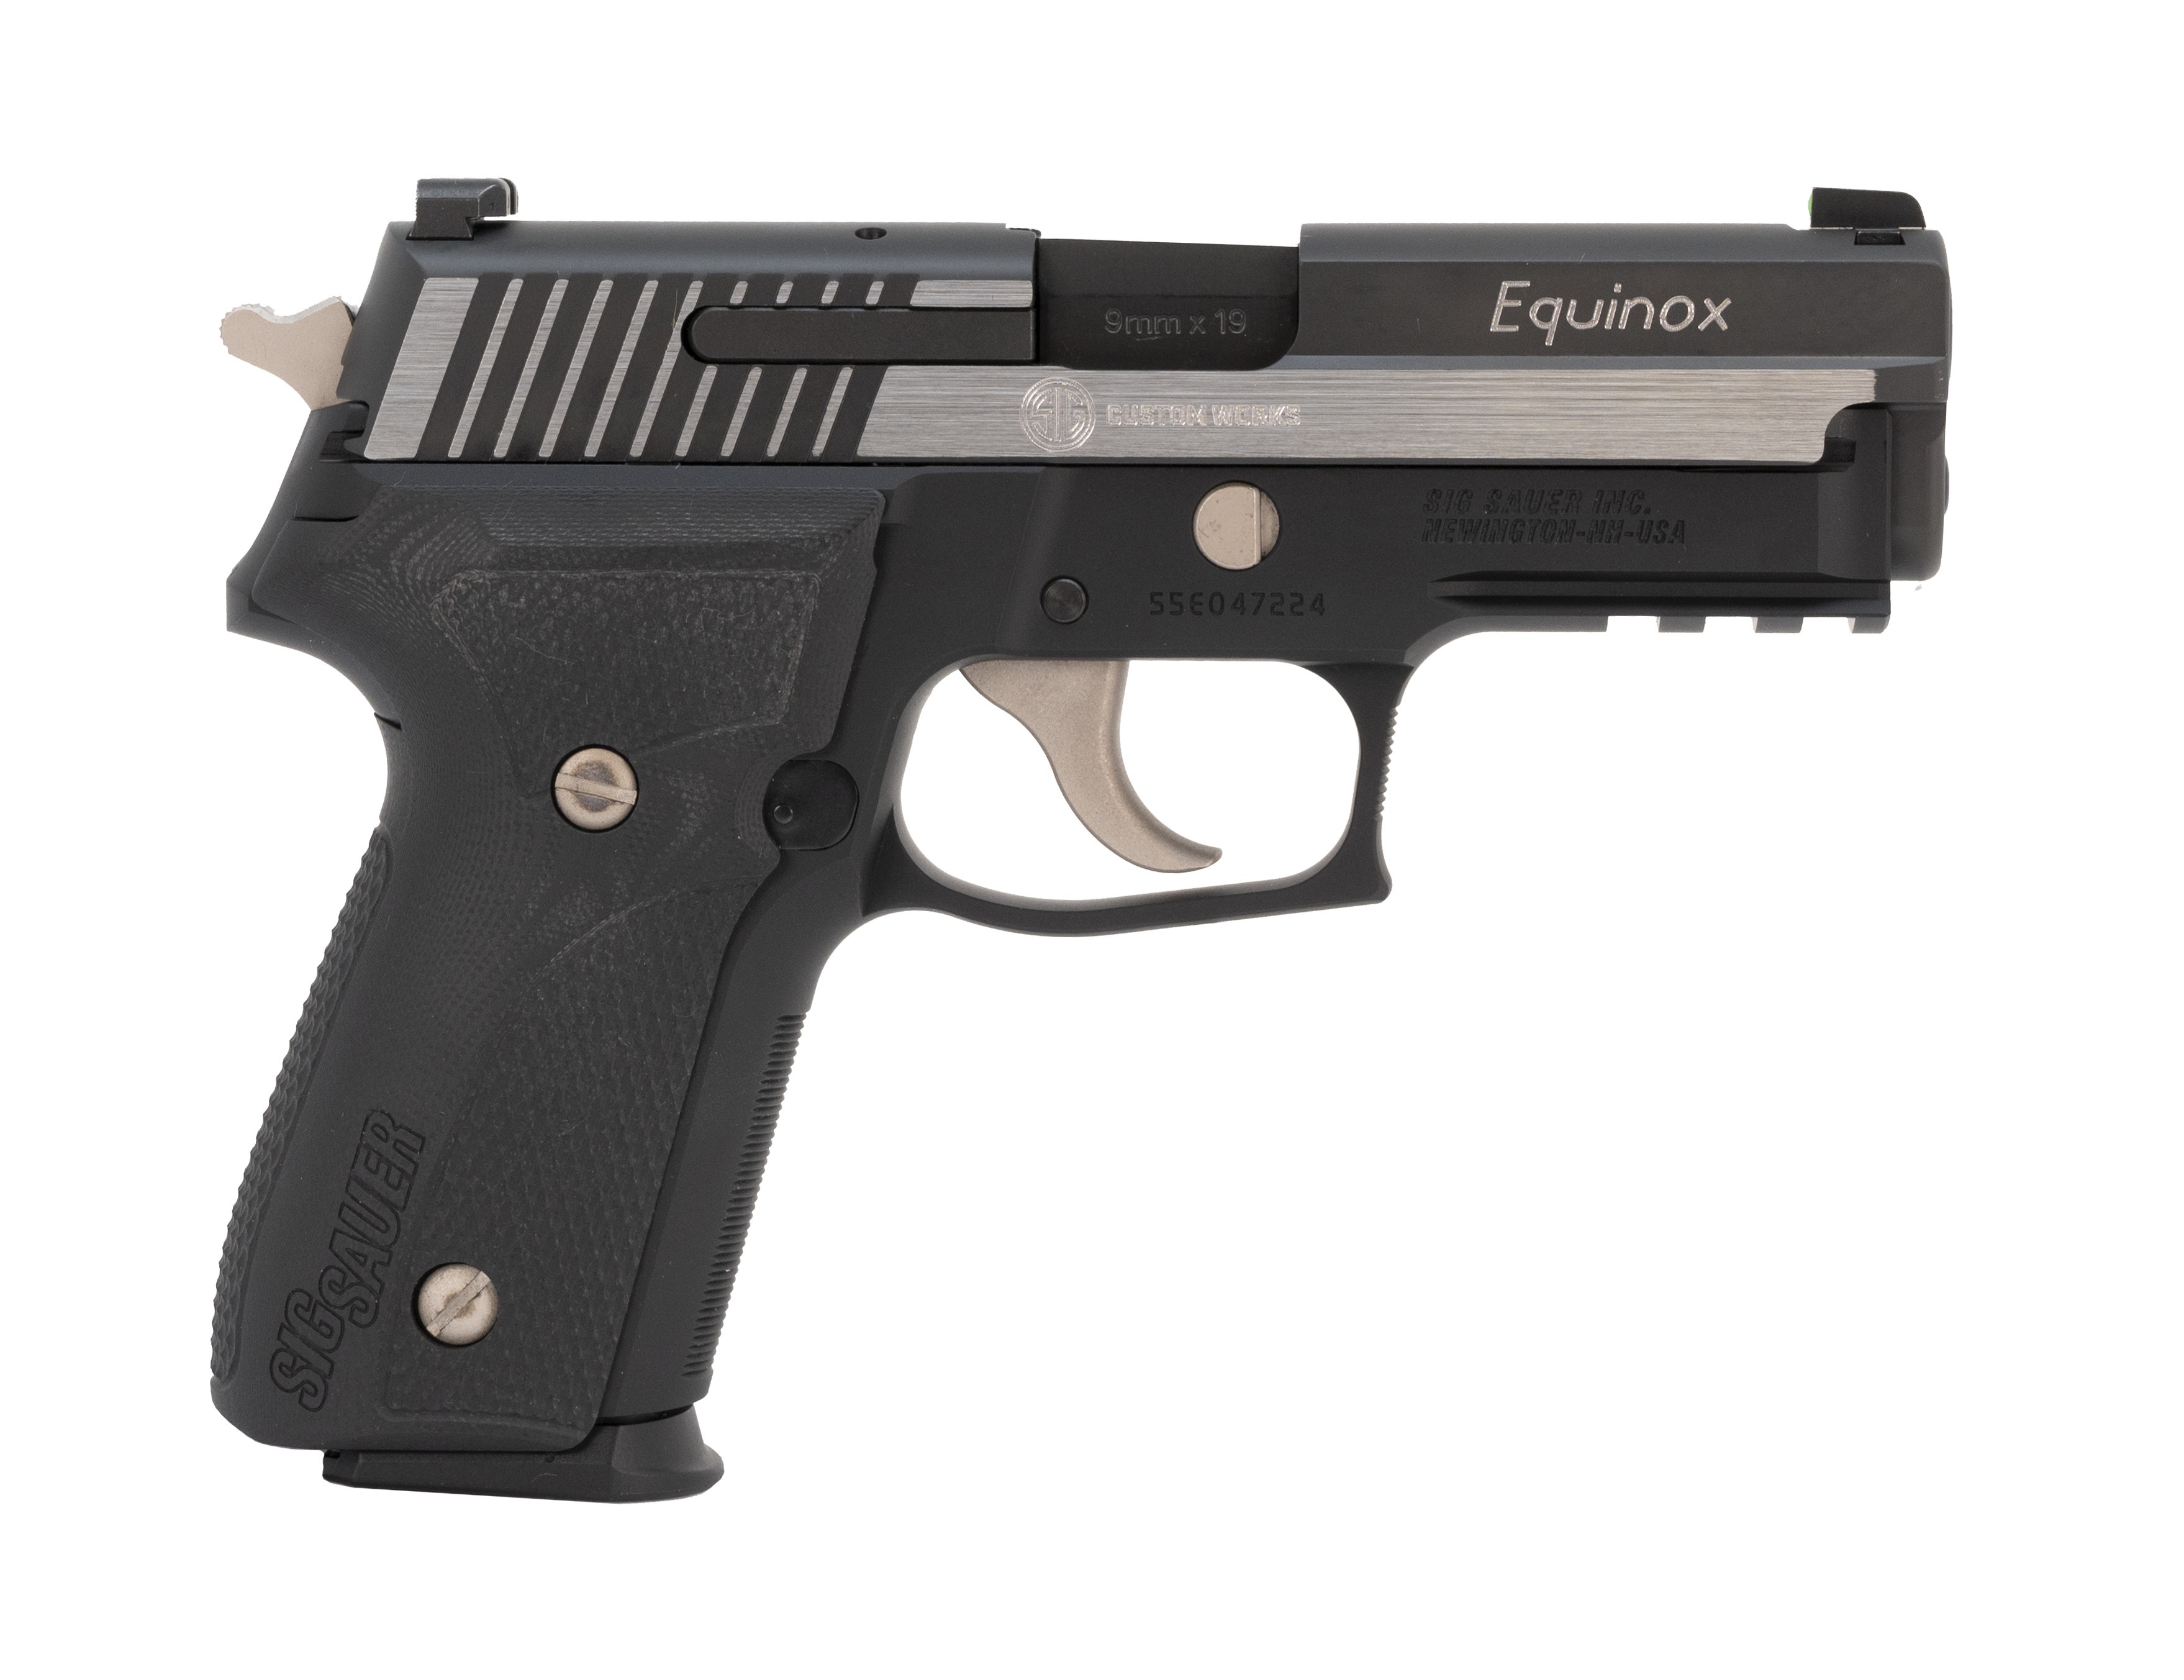 Sig Sauer P229 Equinox 9mm Caliber Pistol For Sale